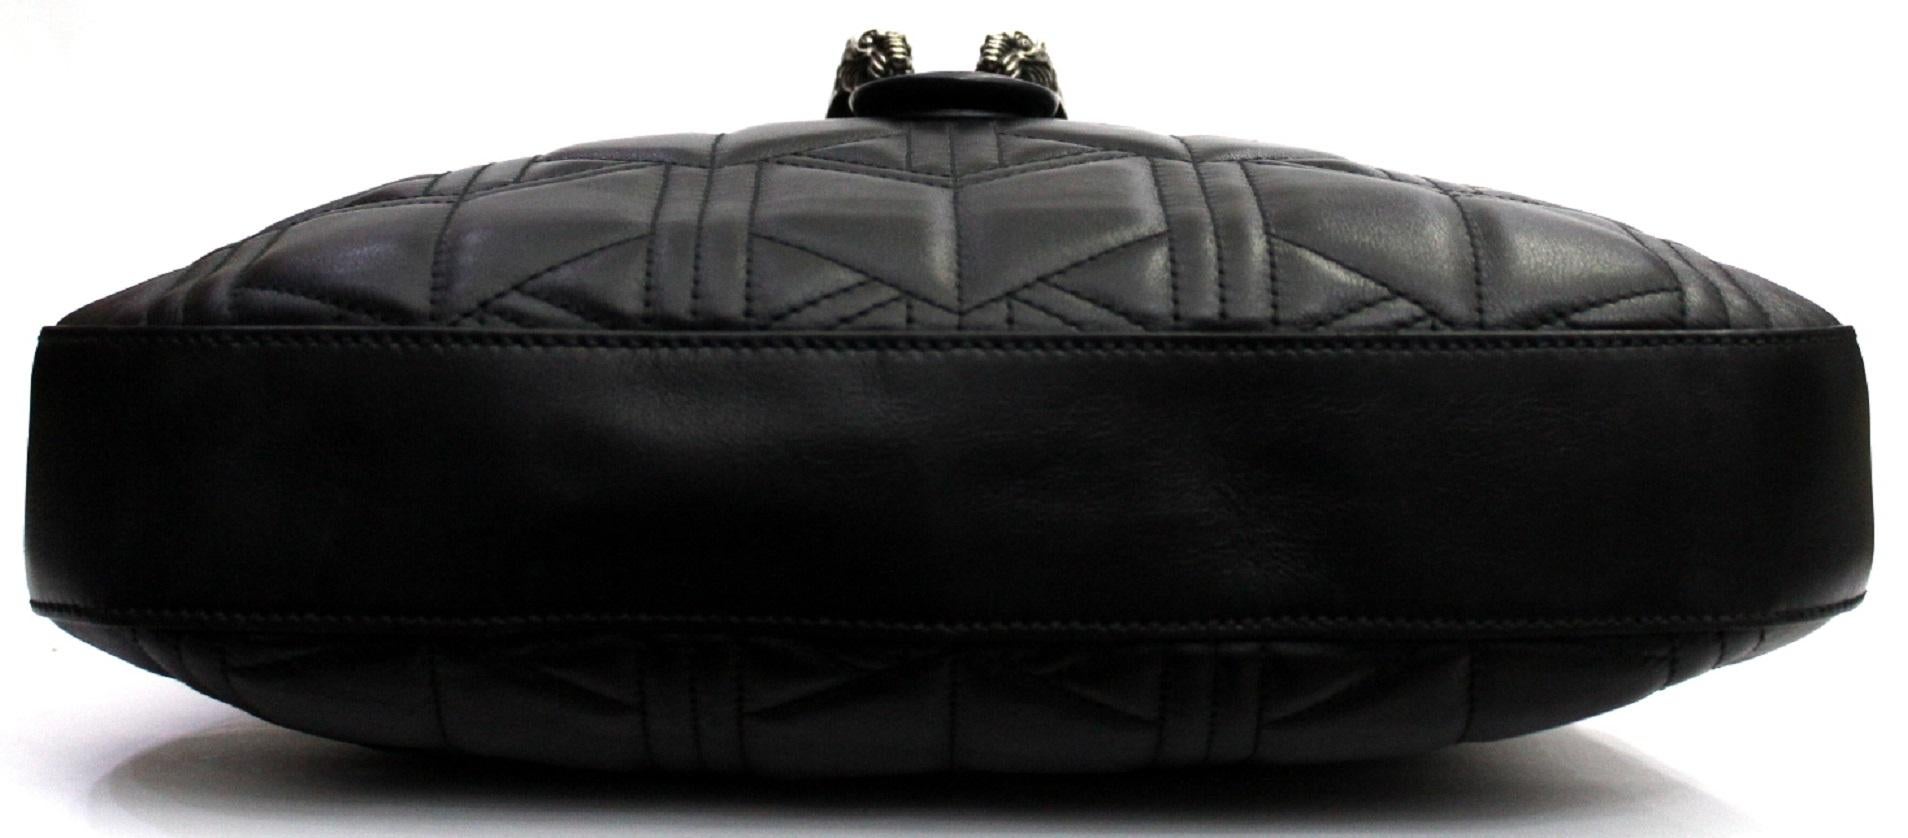 2017 Gucci Black Leather Dionysus Bag 3